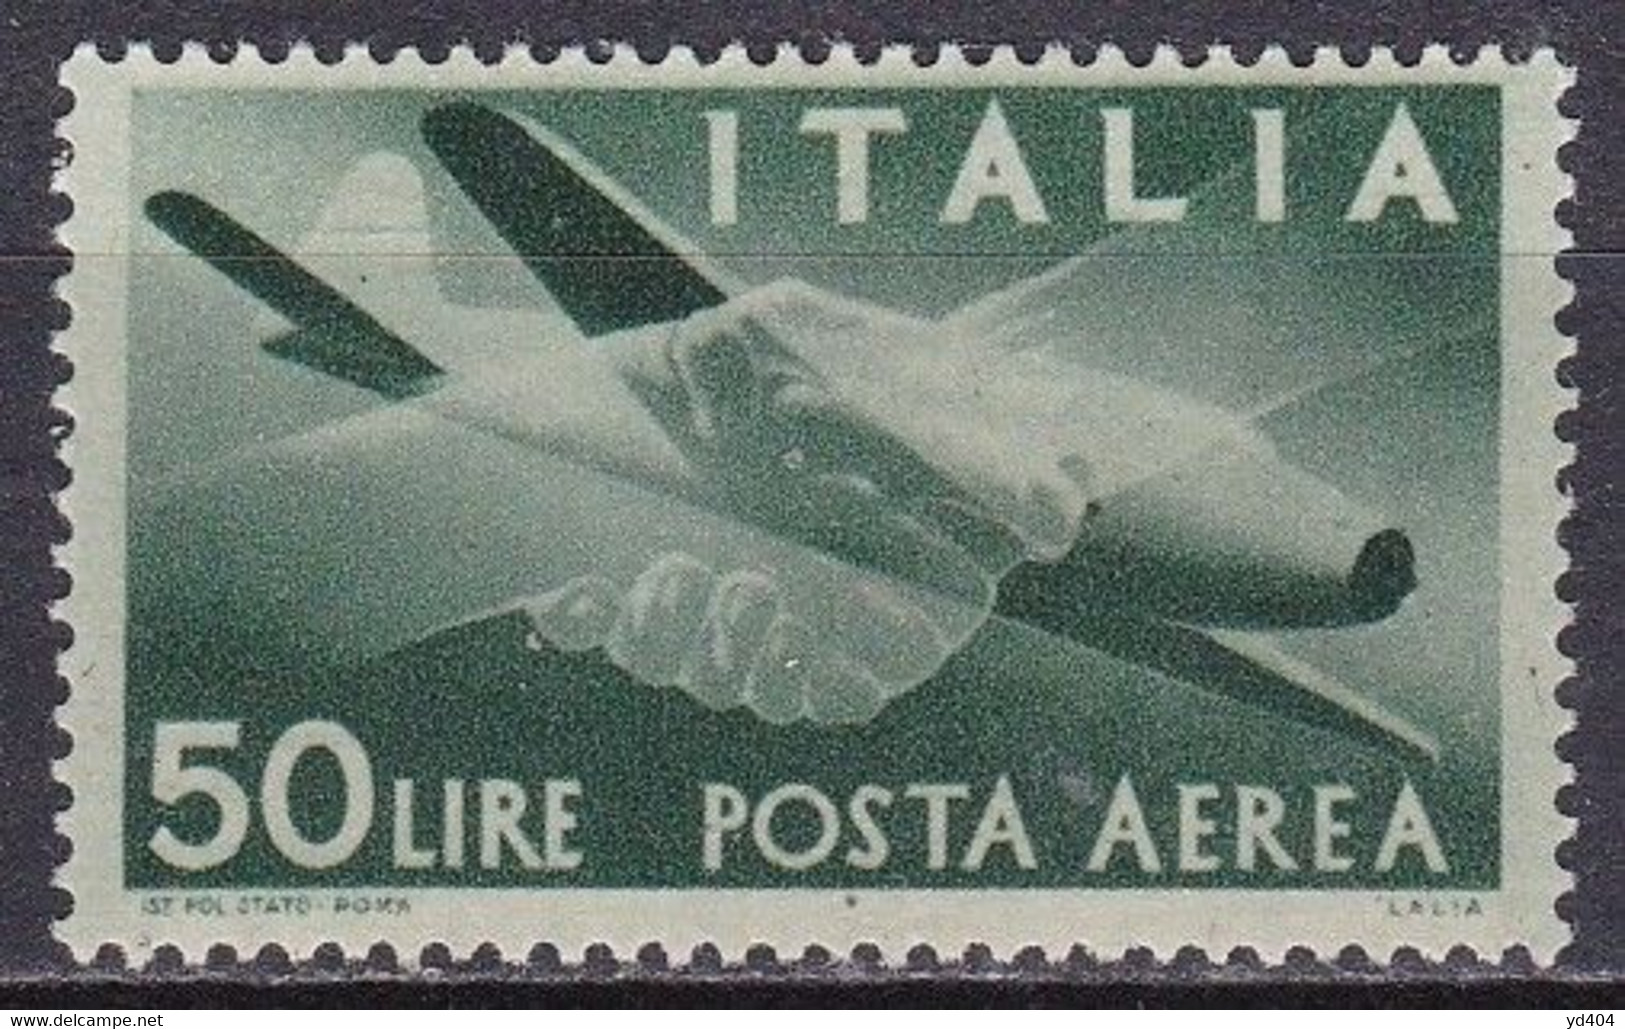 IT125 – ITALY - ITALIE – AIRMAIL – 1947 – CLAPS HANDS & PLANE – SG # 677 MVLH 50 € - Luftpost